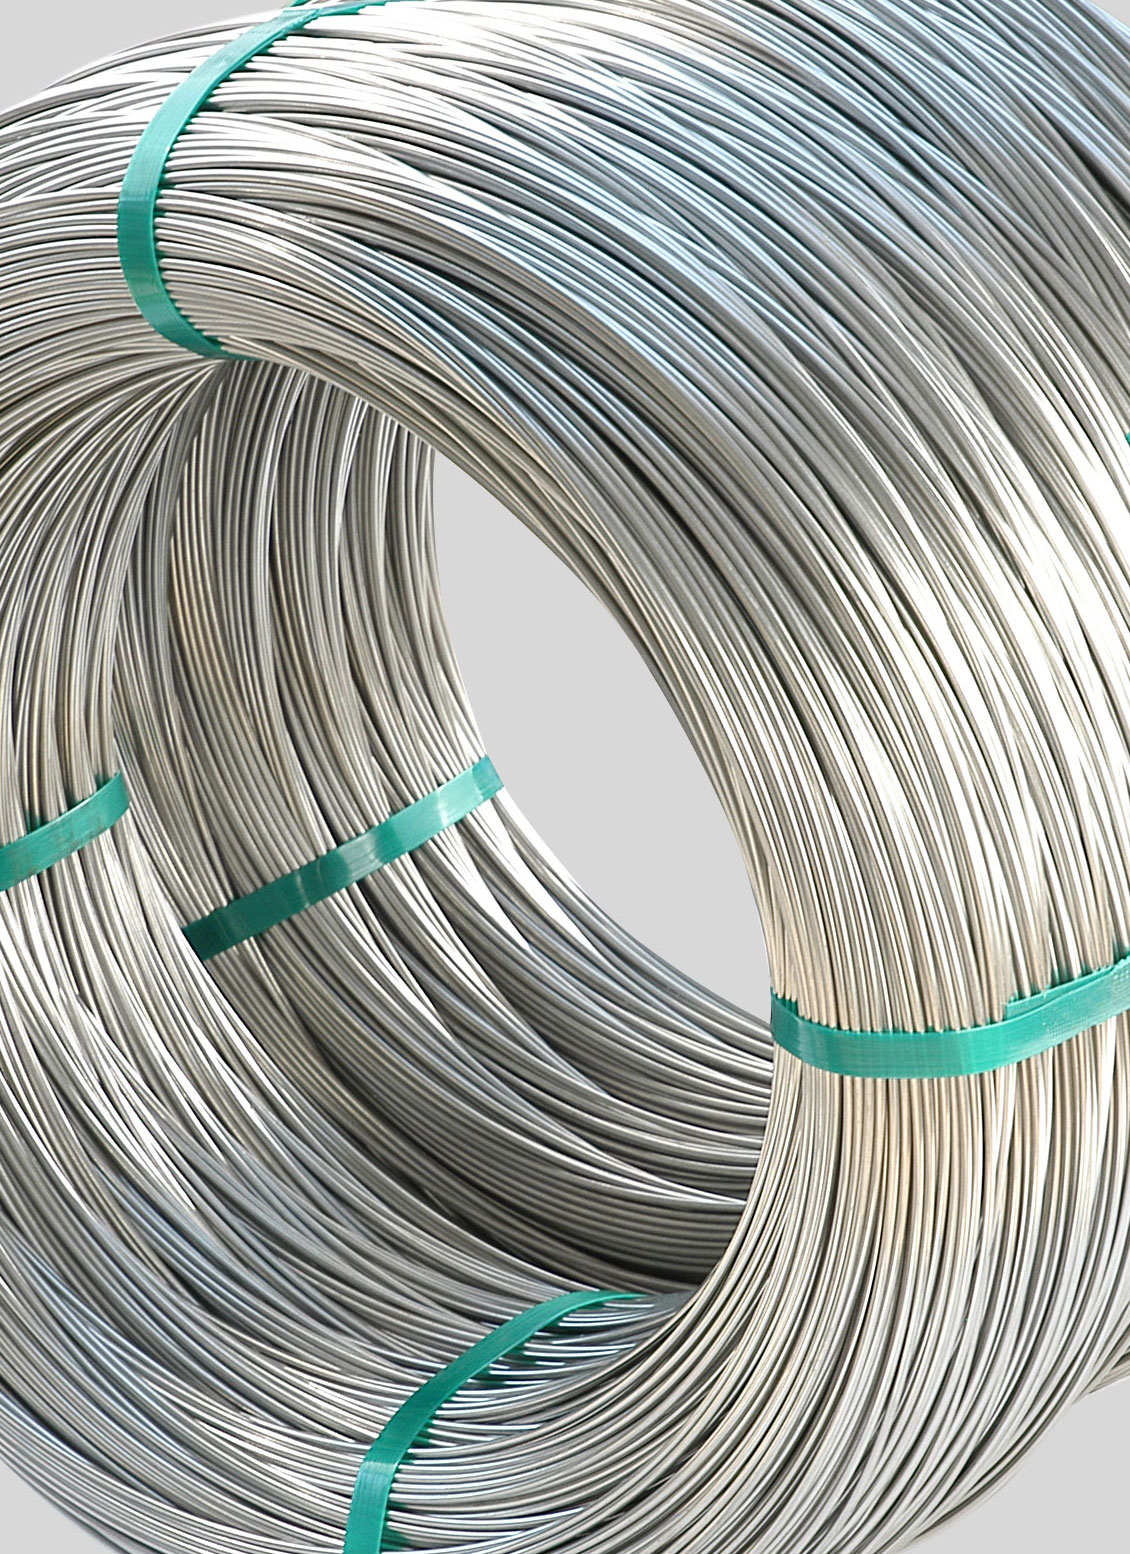 stainless-steel-wire-img2aa.jpg